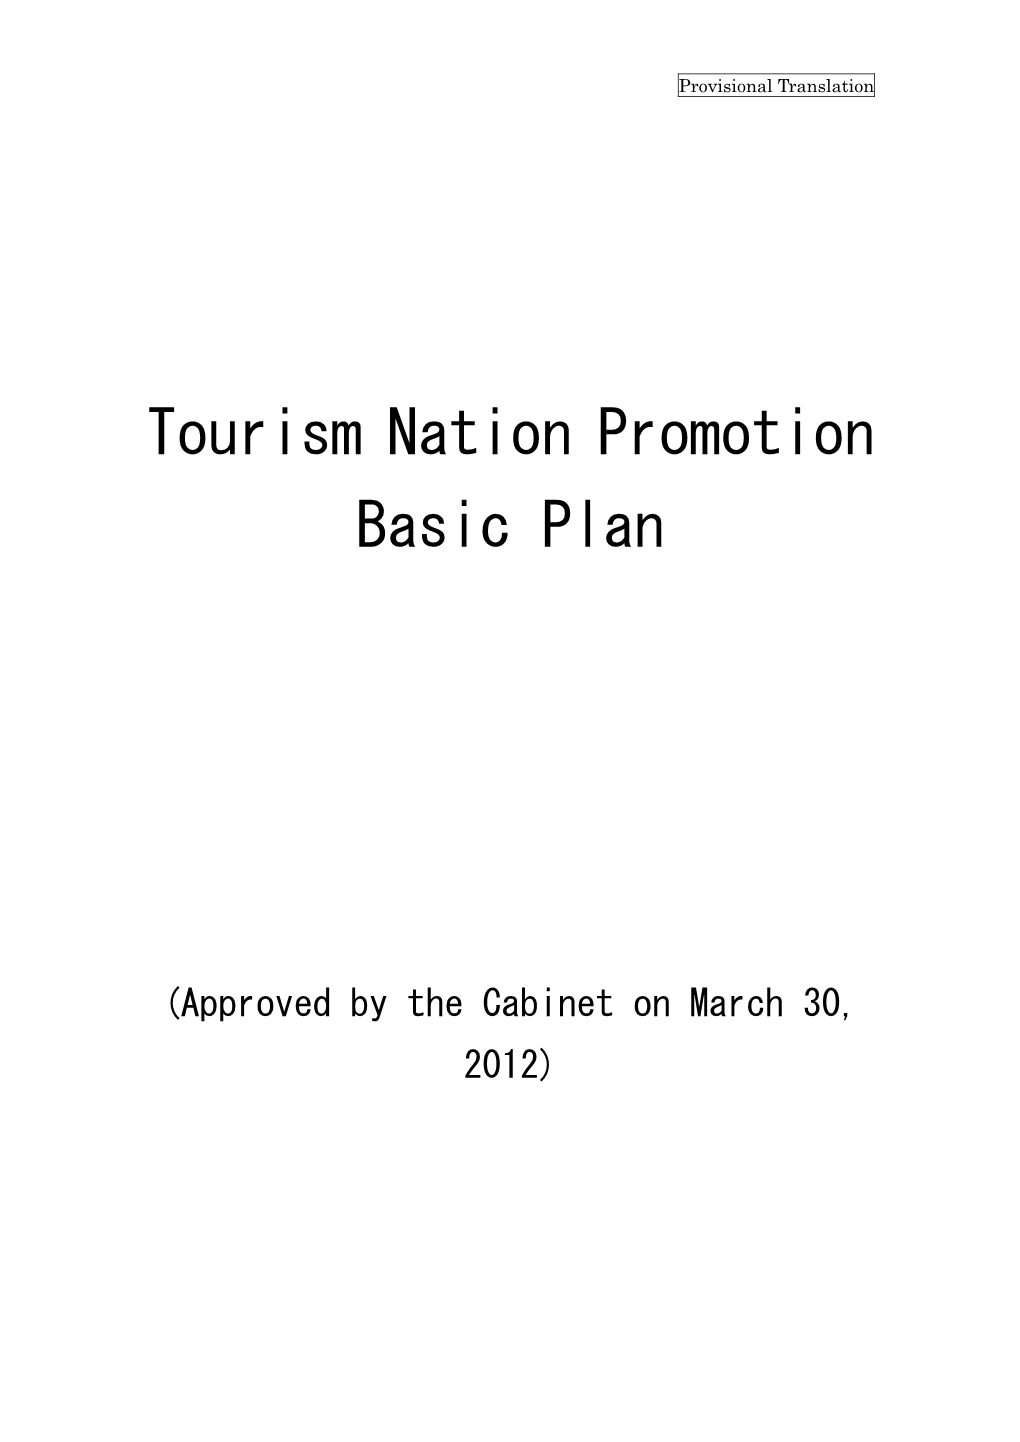 Tourism Nation Promotion Basic Plan